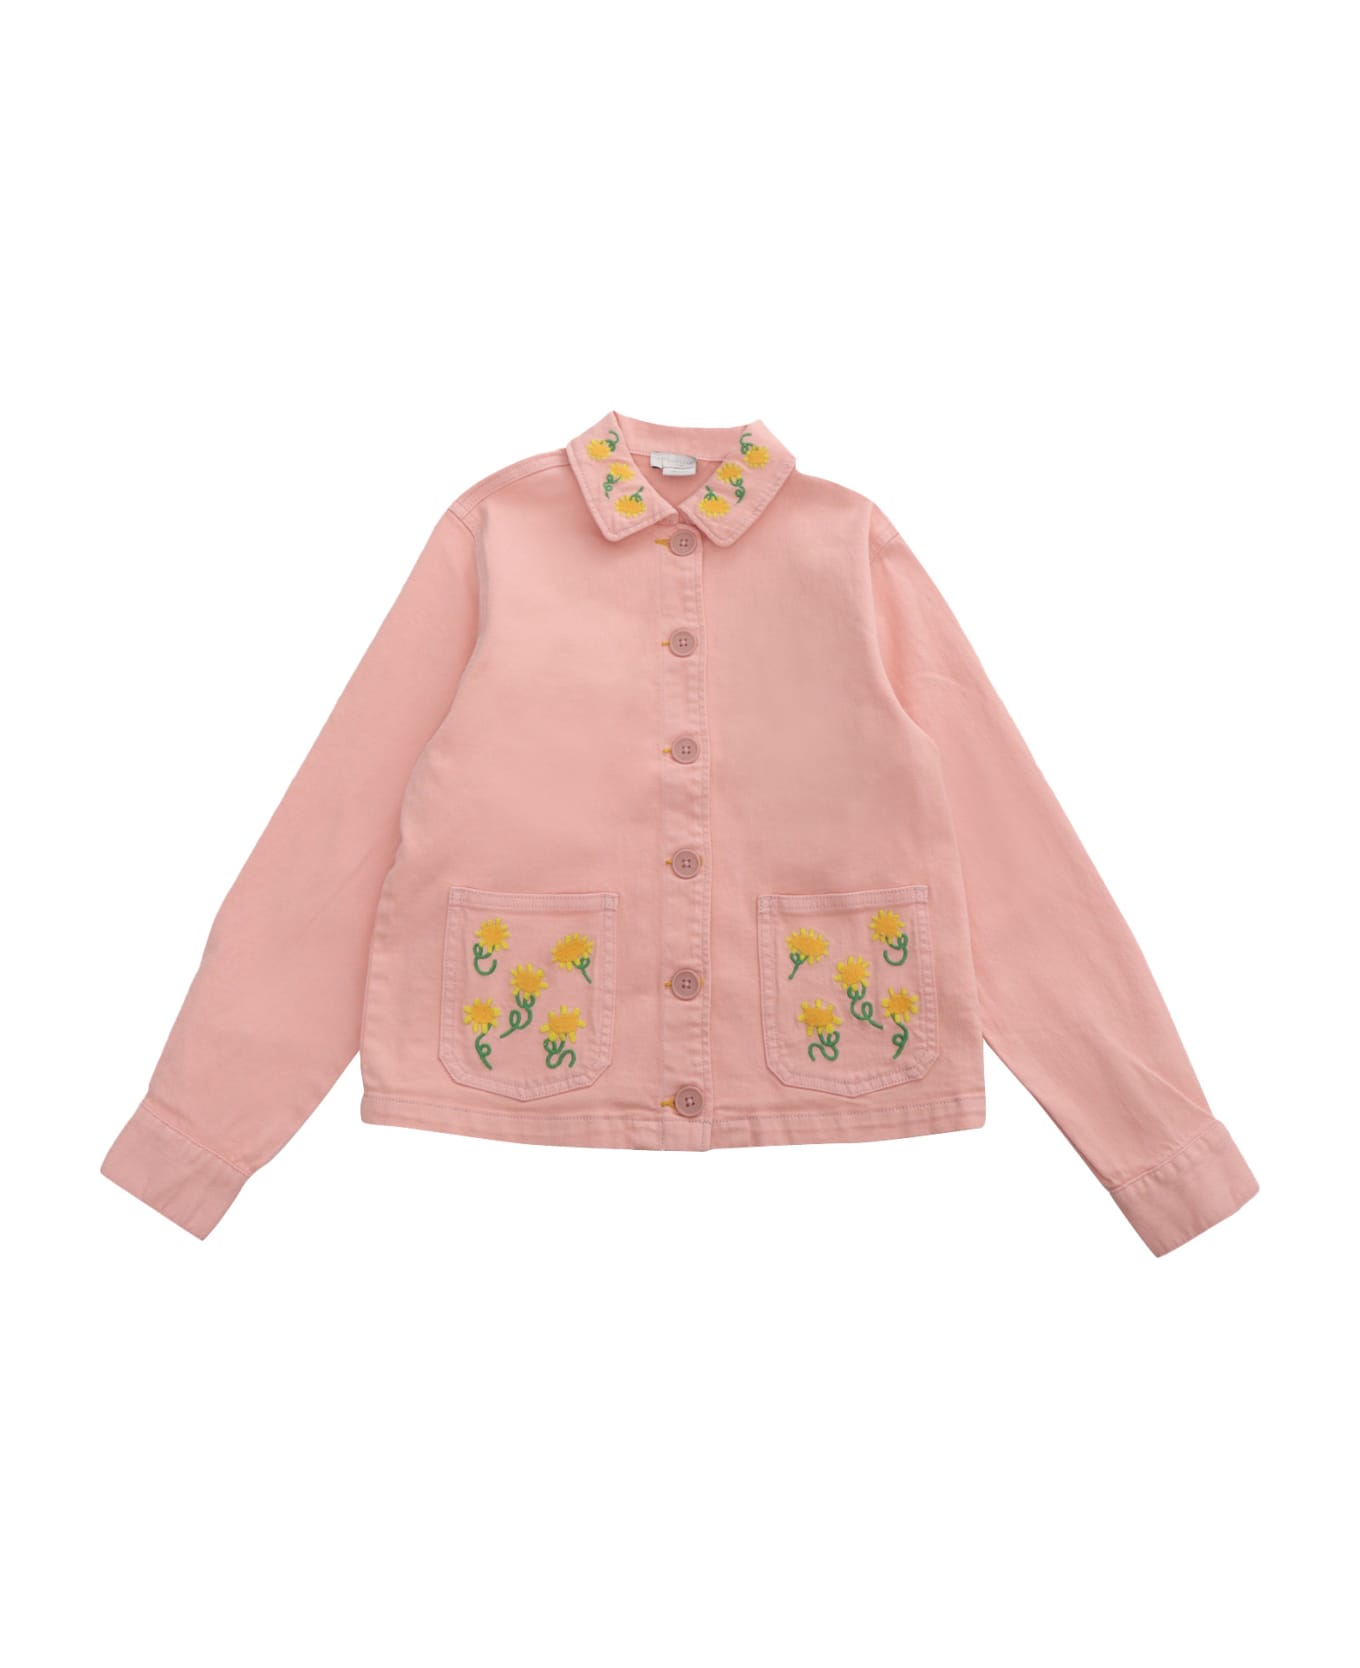 Stella McCartney Kids Pink Denim Jacket With Flowers - PINK